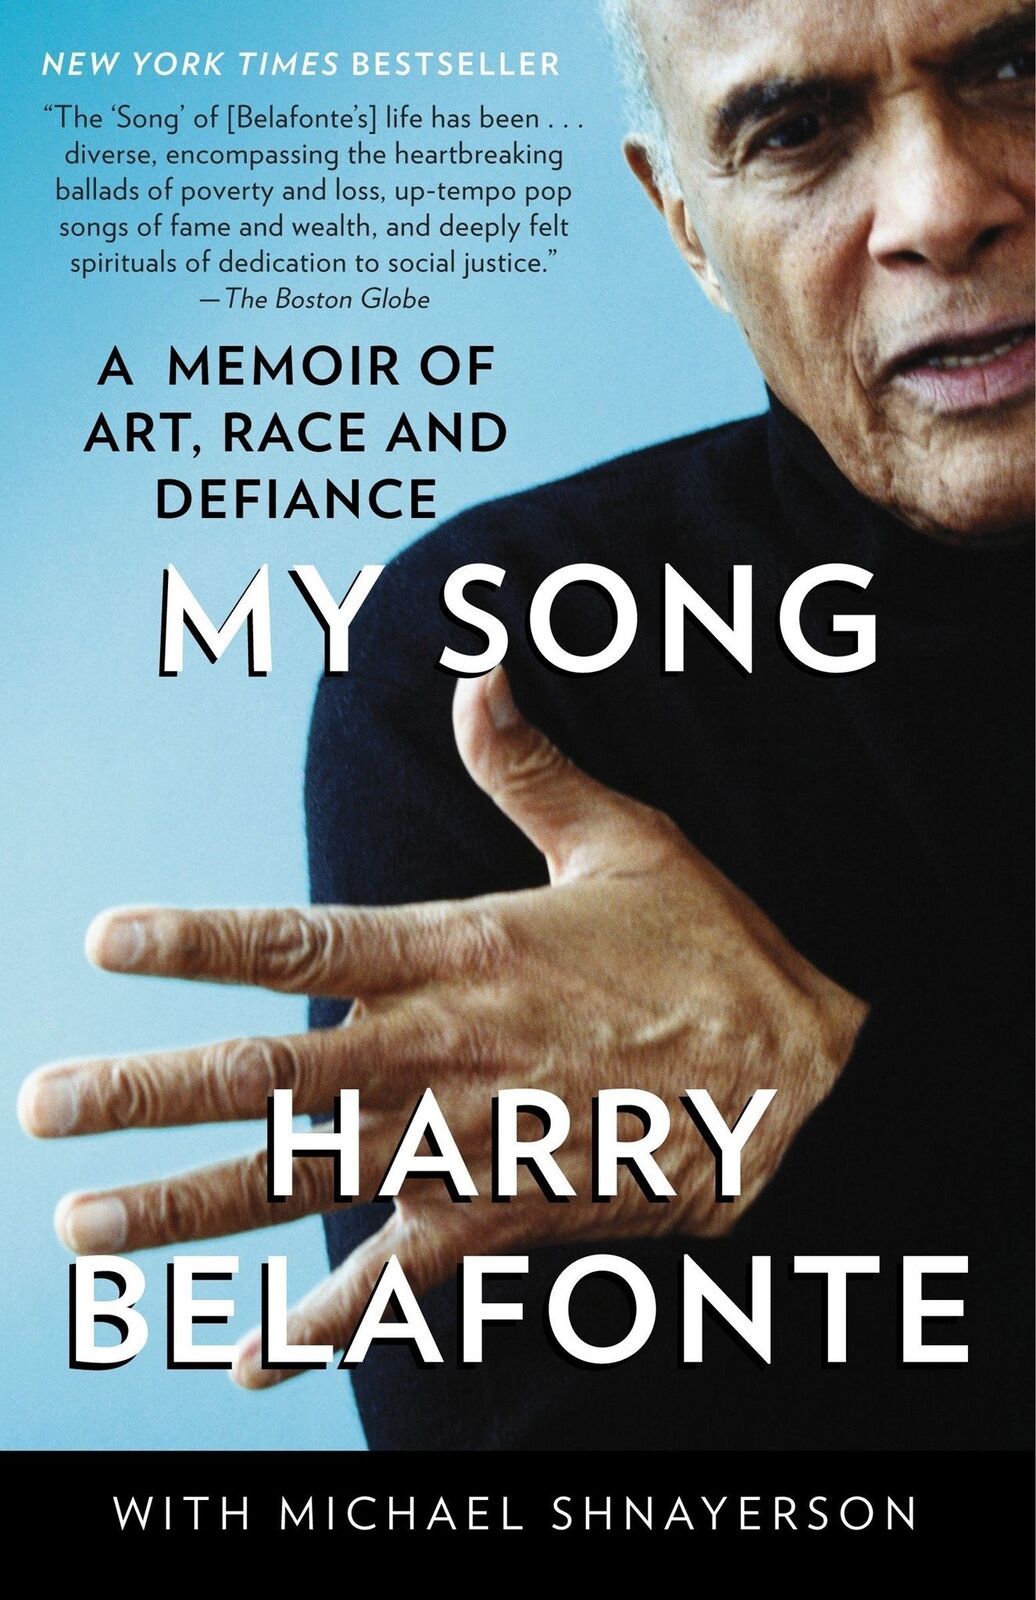 HARRY BELAFONTE - MY SONG: A MEMOIR OF ART, RACE AND DEFIANCE - PAPERBACK - BOOK